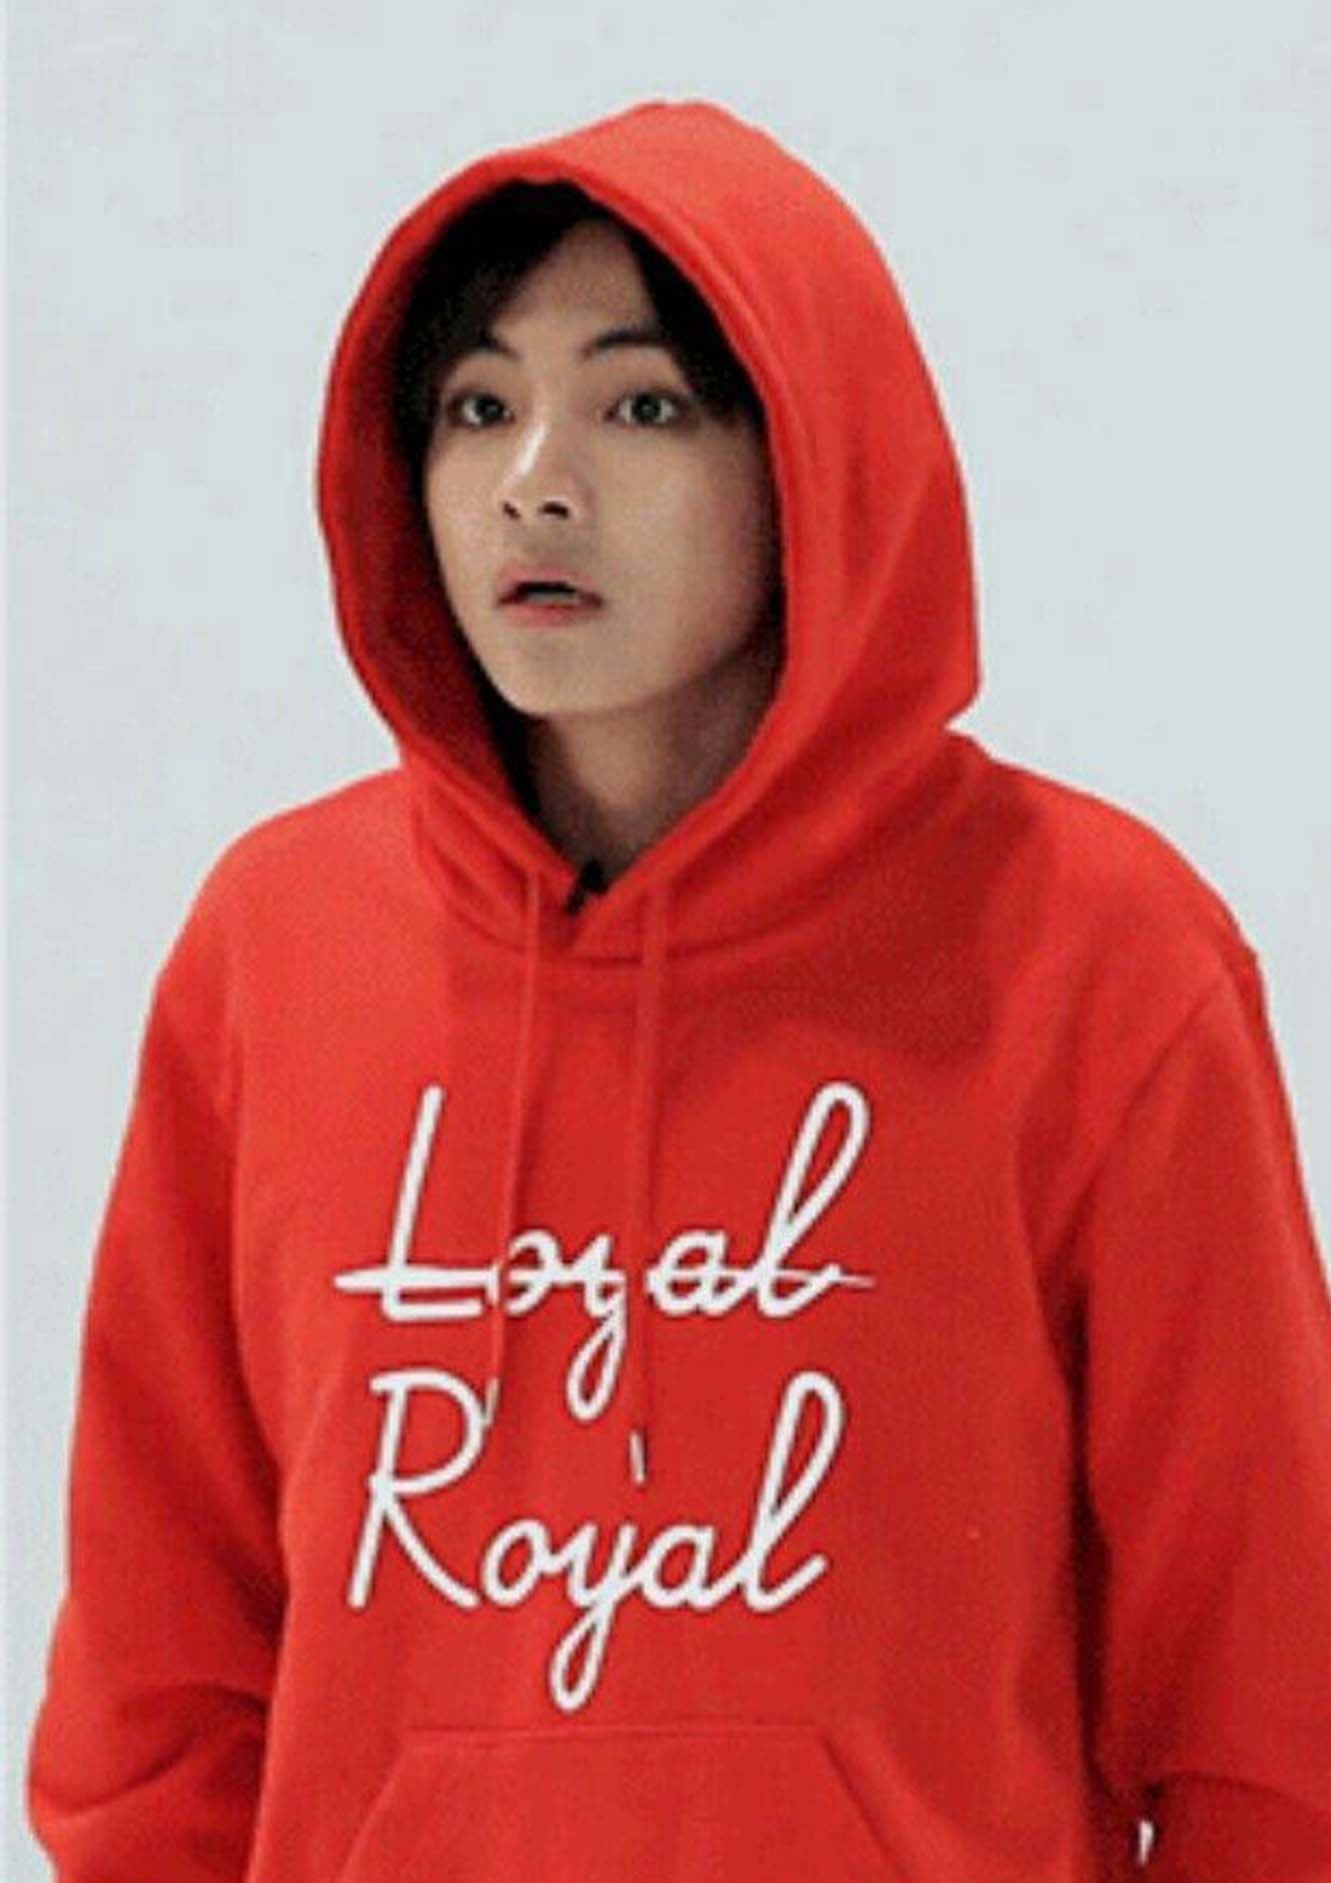 BTS Taehyung Loyal Royal Unisex Hoodie